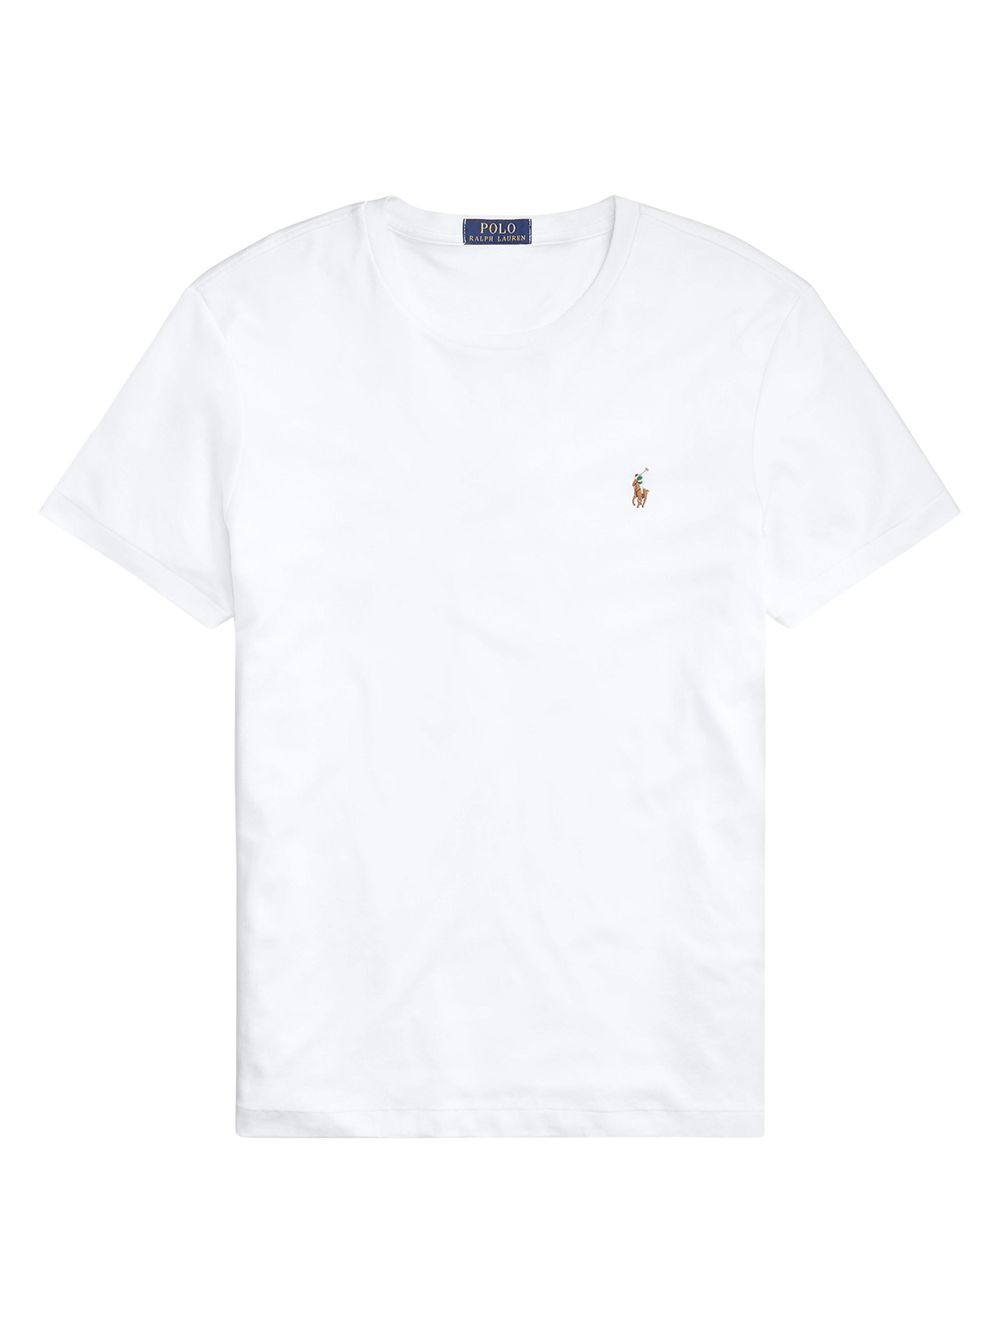 Хлопковая футболка Пима Polo Ralph Lauren, белый